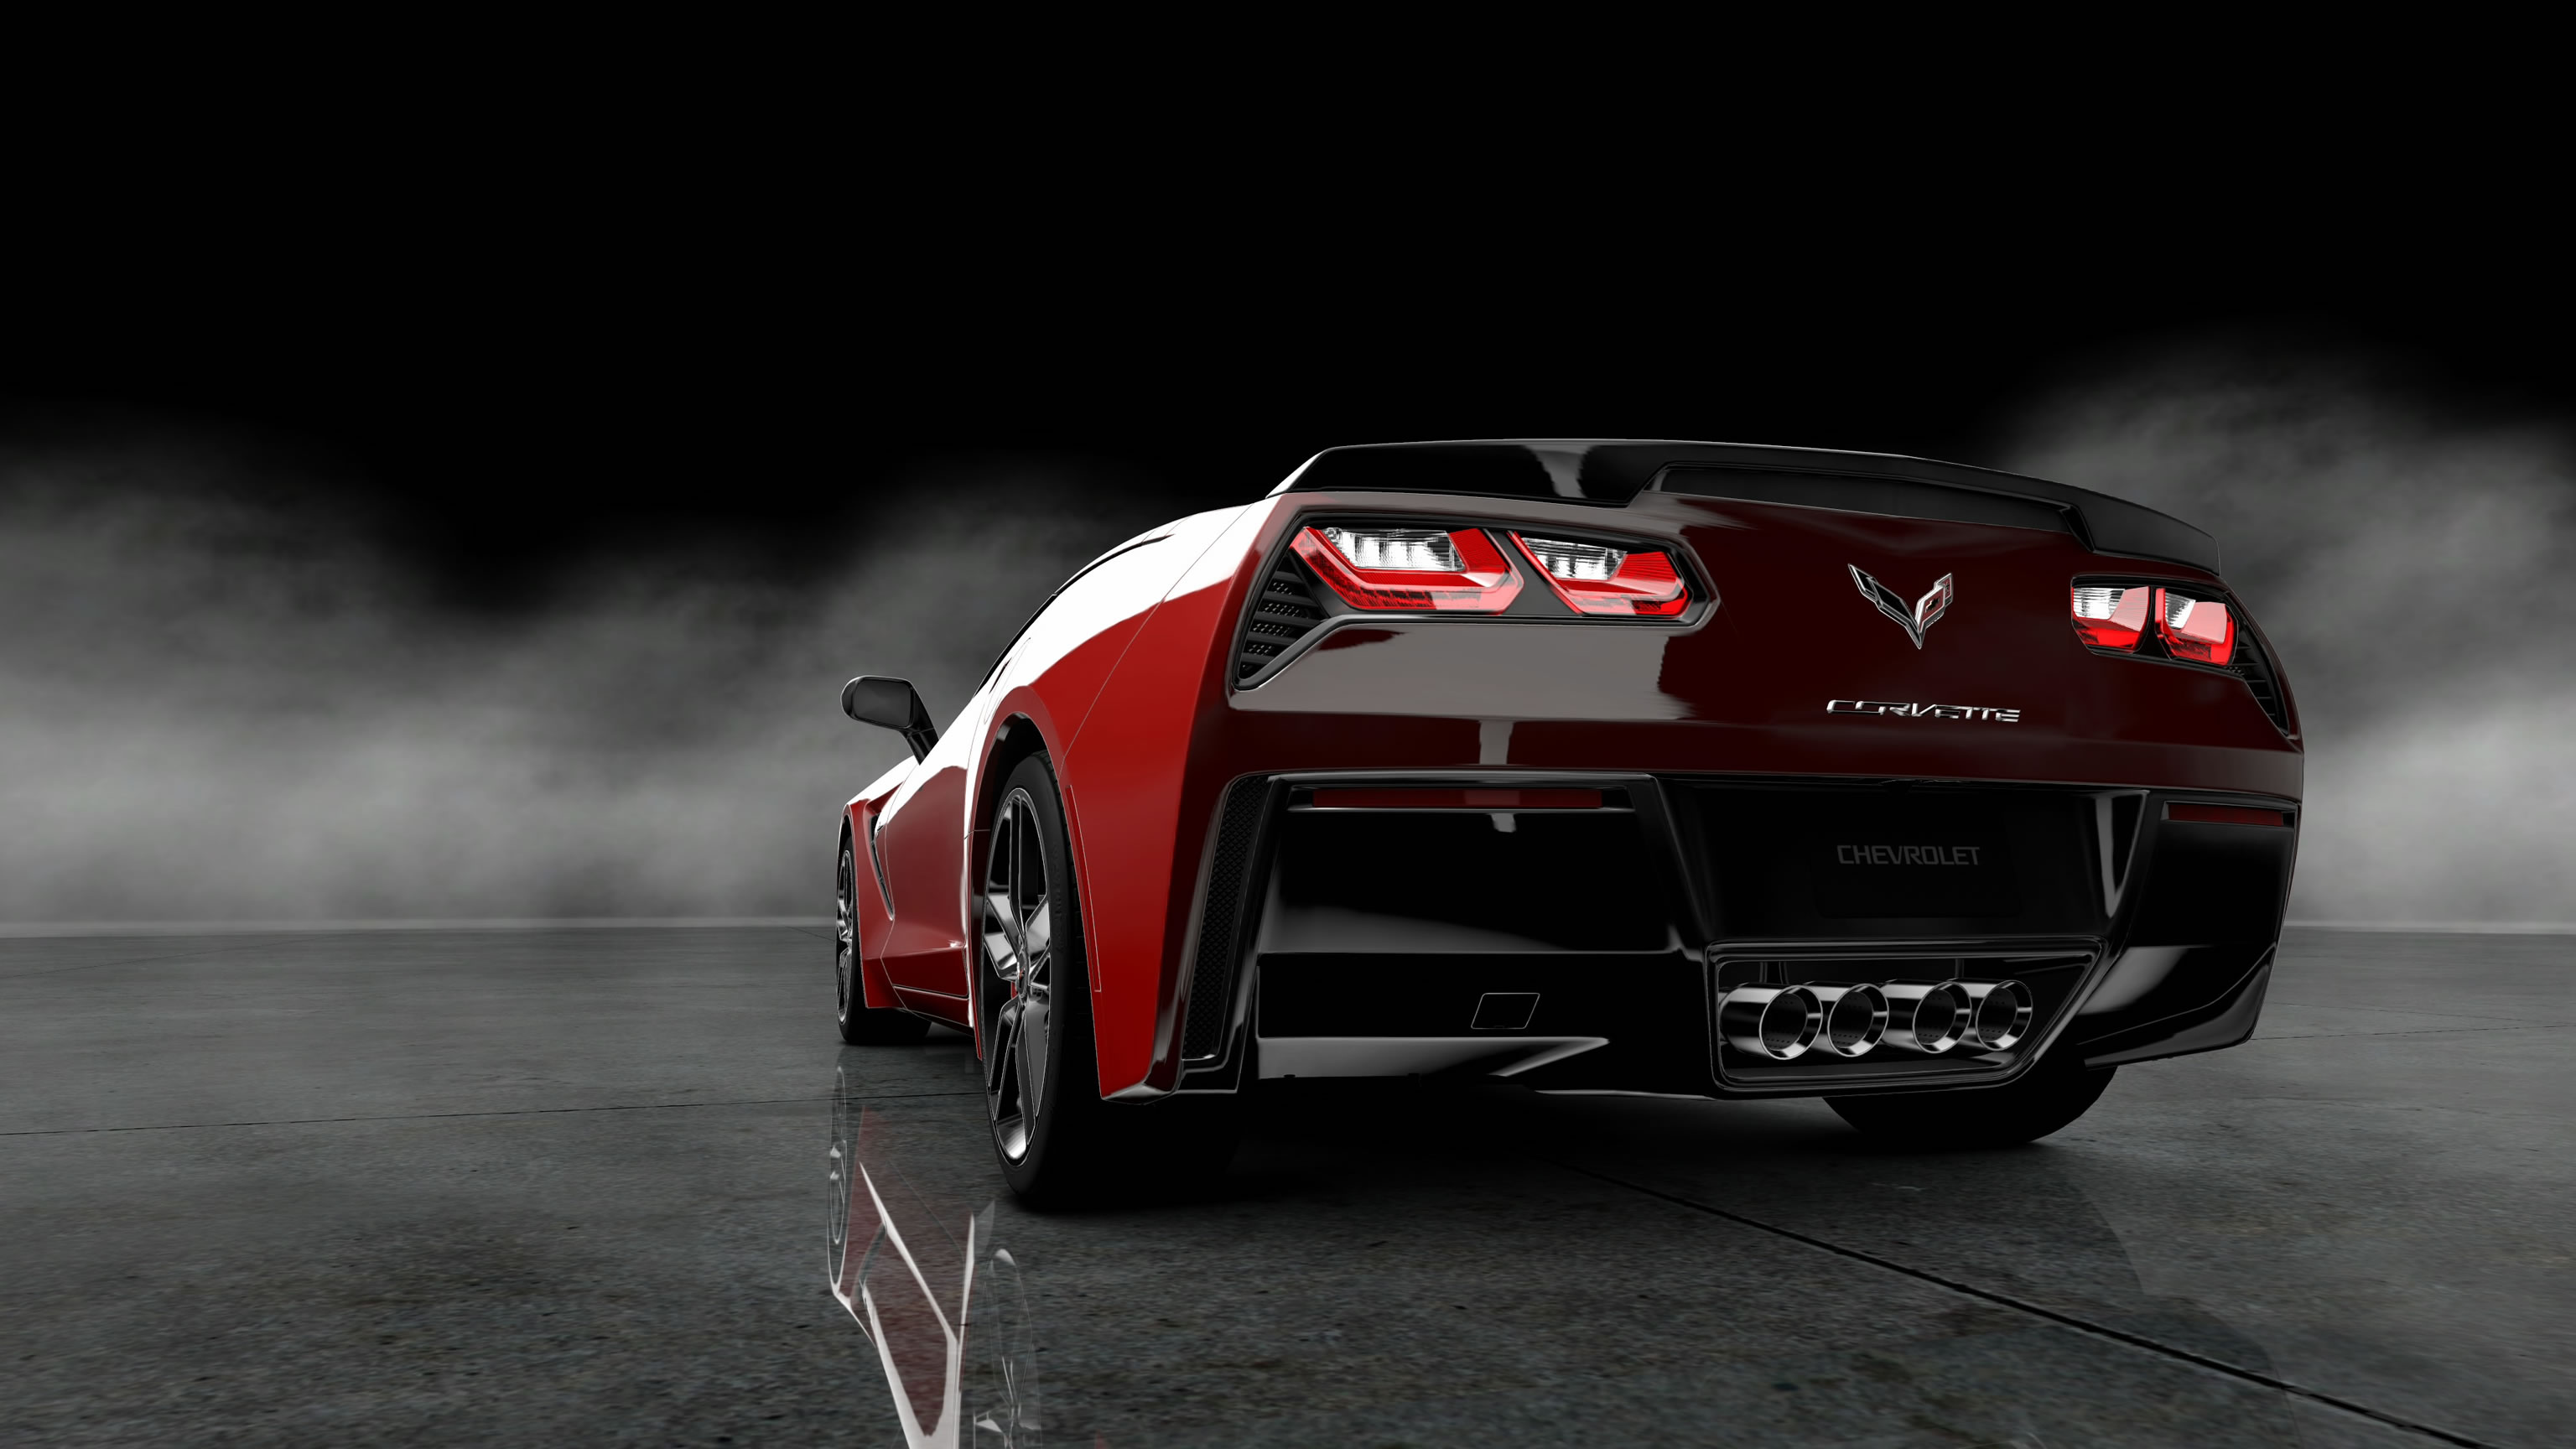 Corvette: Stingray C7, Chevy sports car, Gran Turismo 7, Racing sim video game. 3080x1730 HD Background.